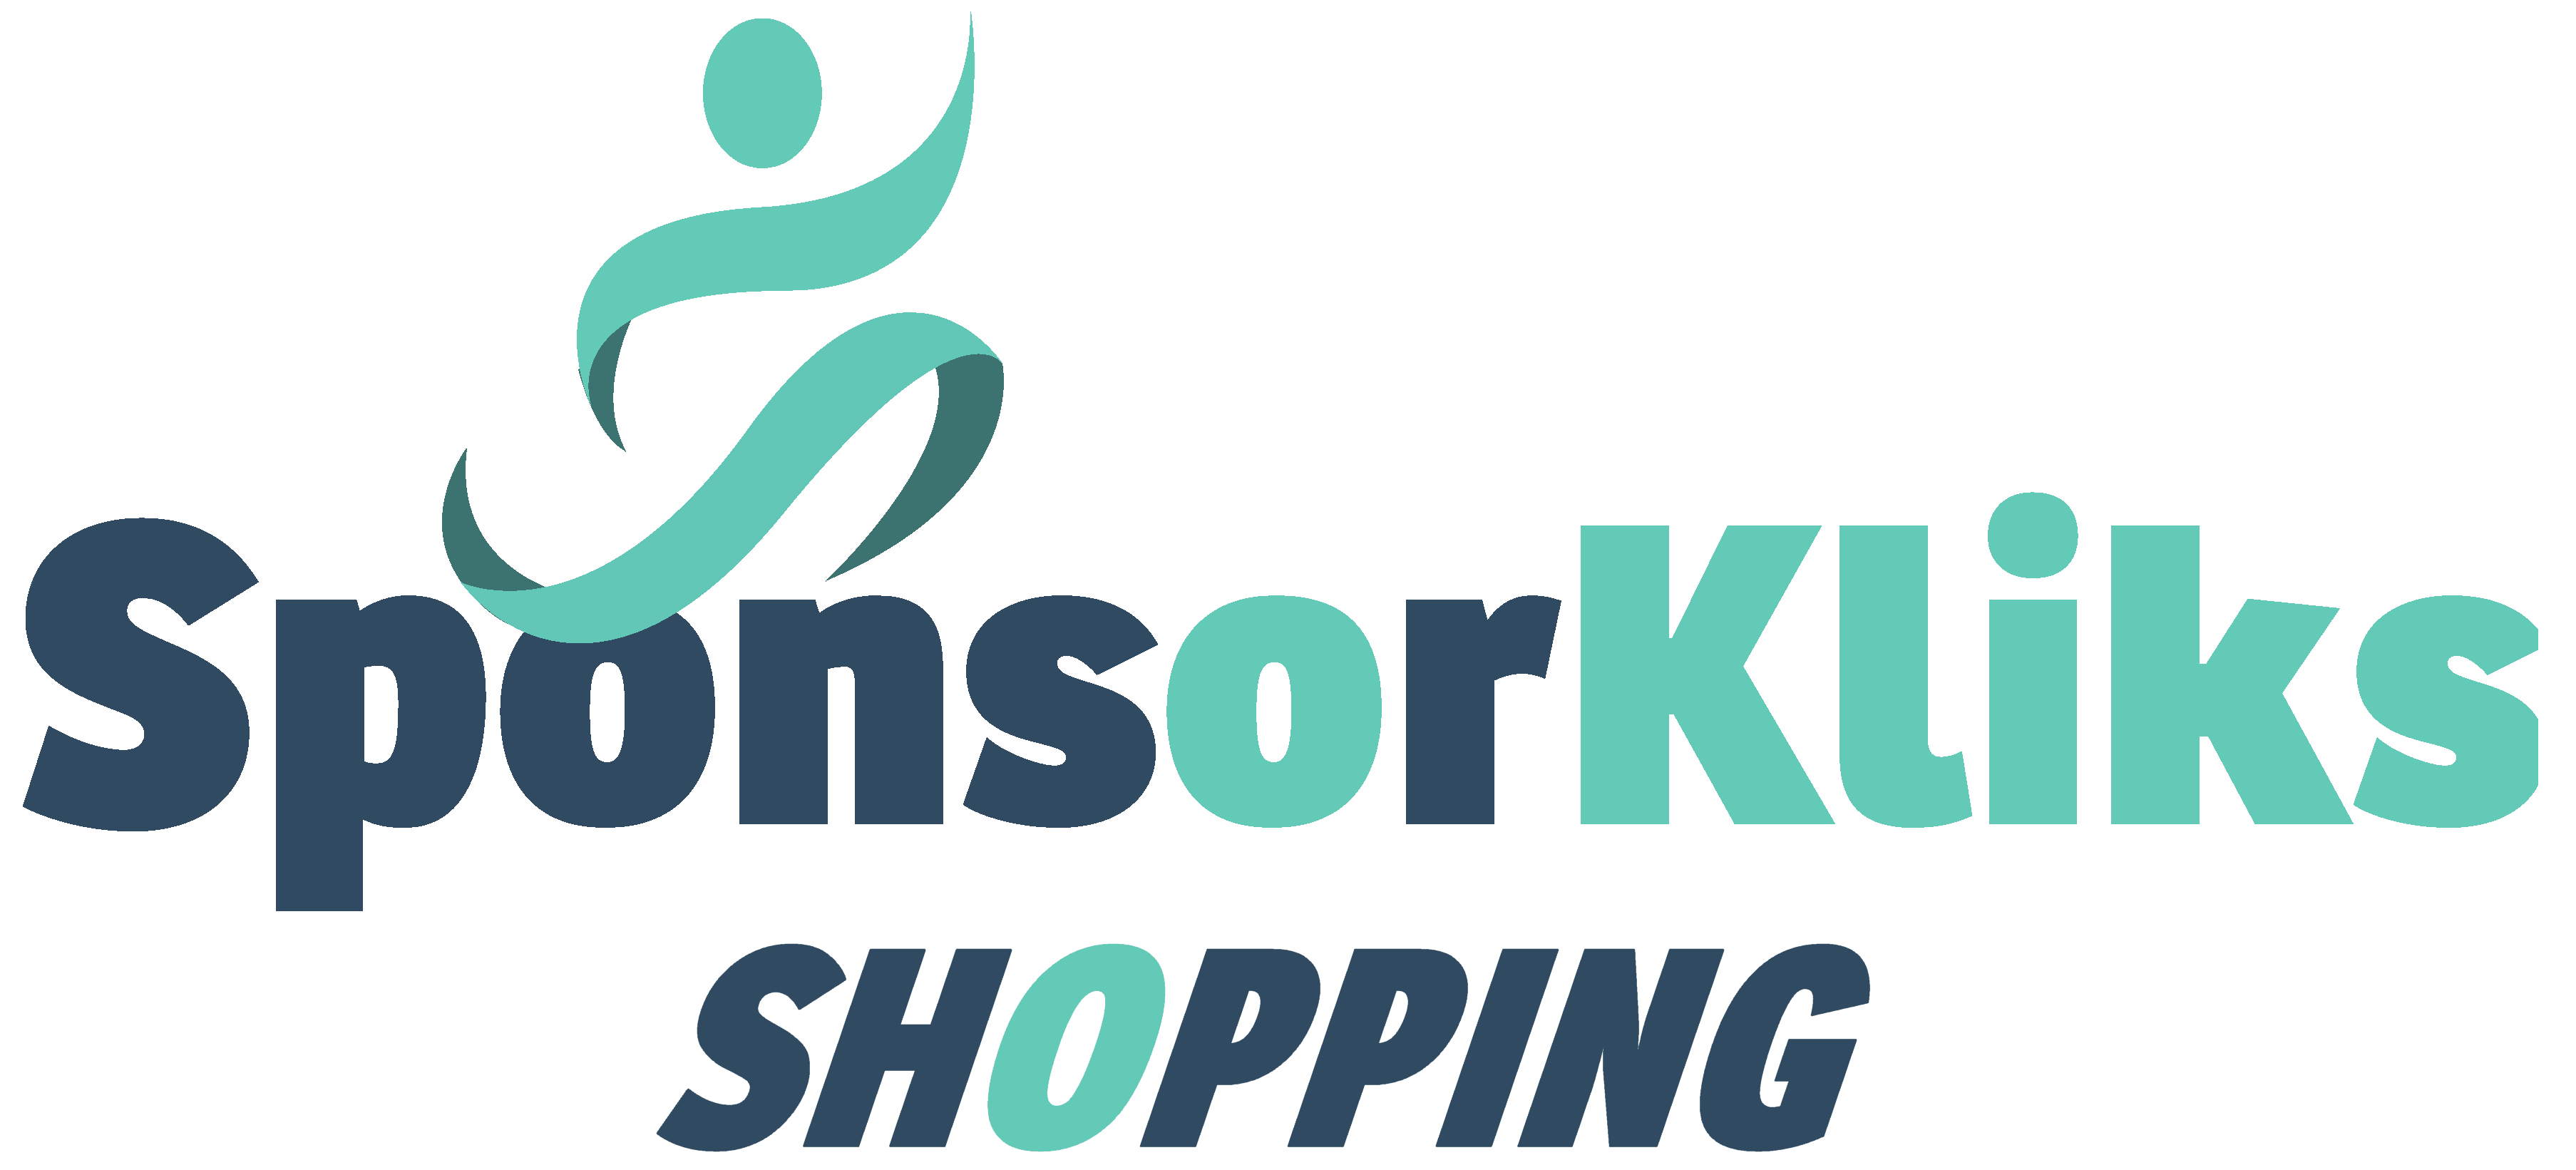 SponsorKliks Shopping